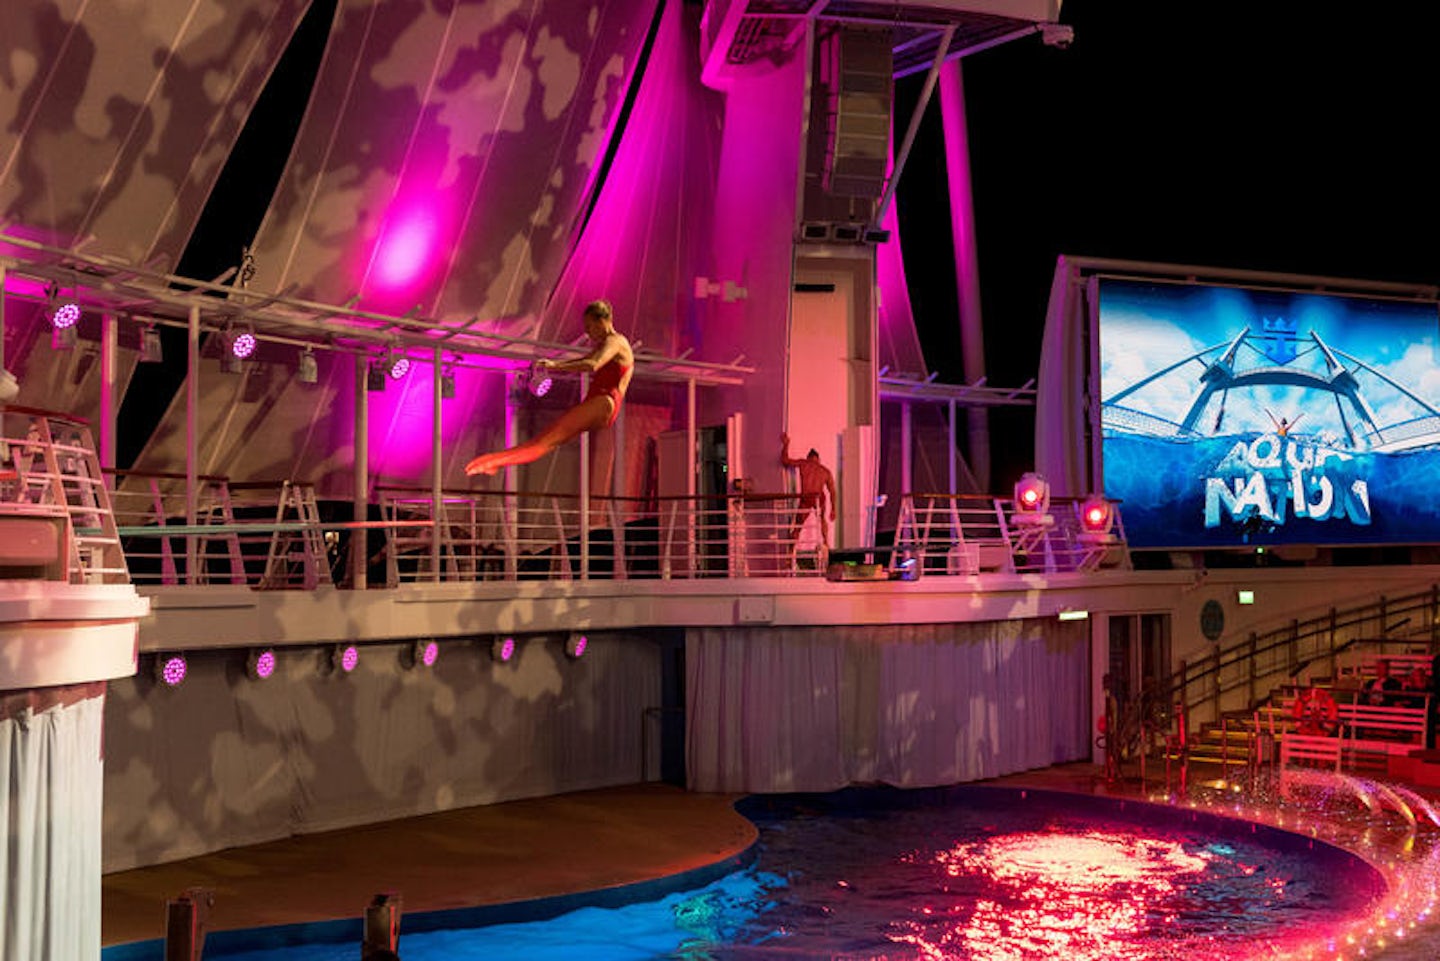 AquaTheater on Symphony of the Seas